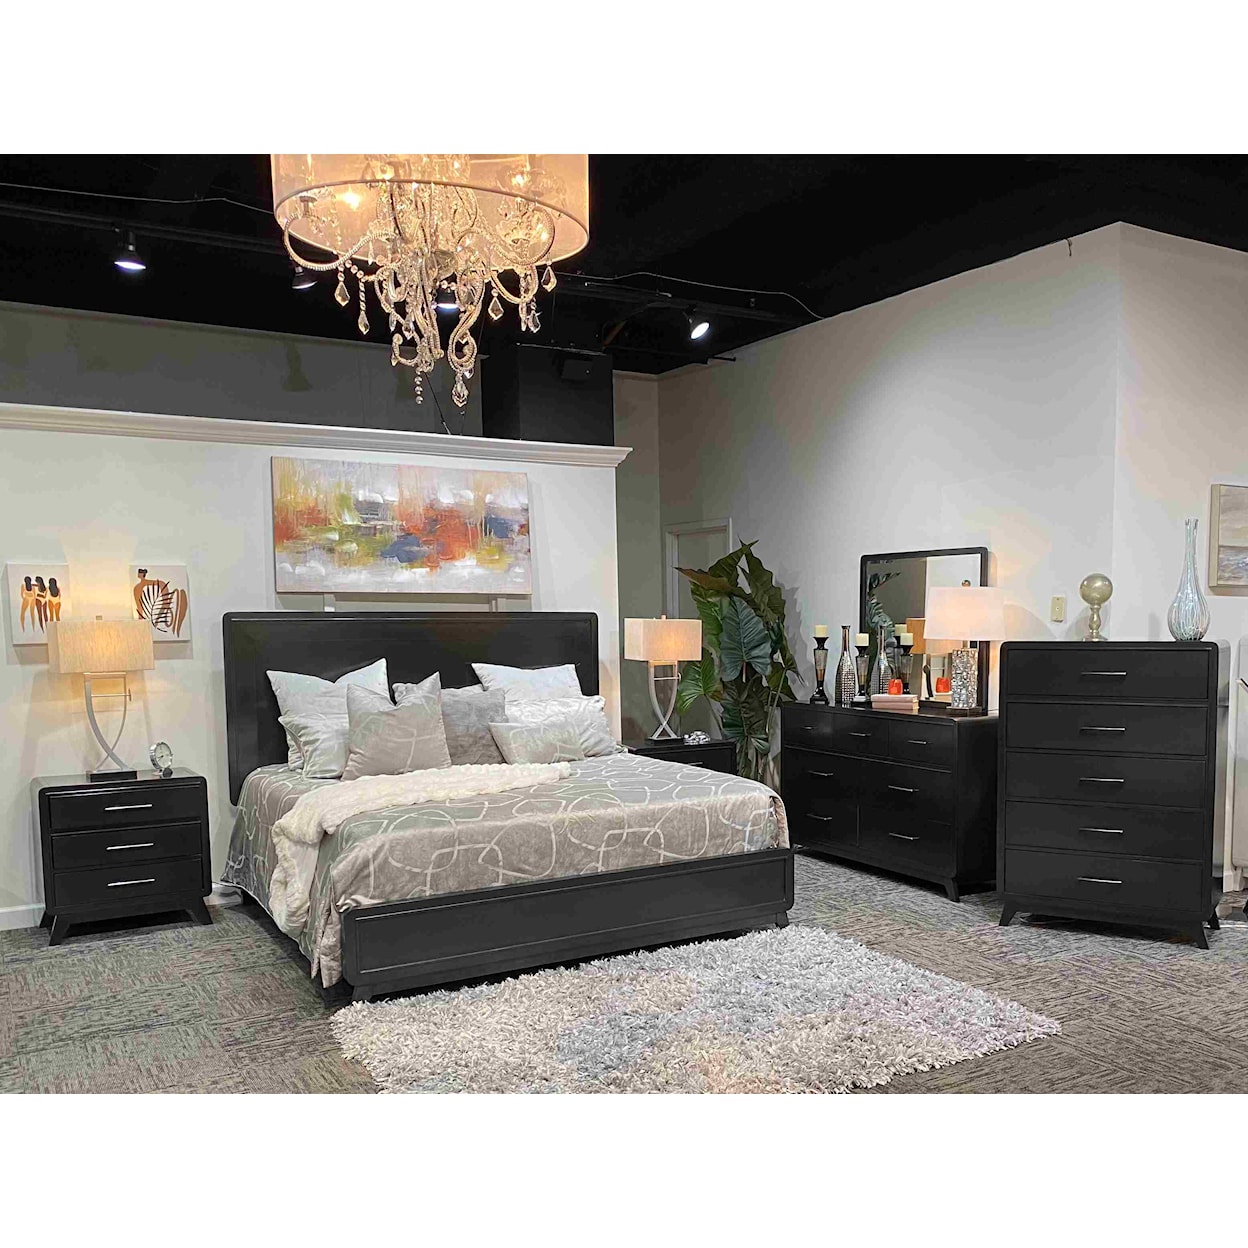 New Classic Furniture Skylar King Bed